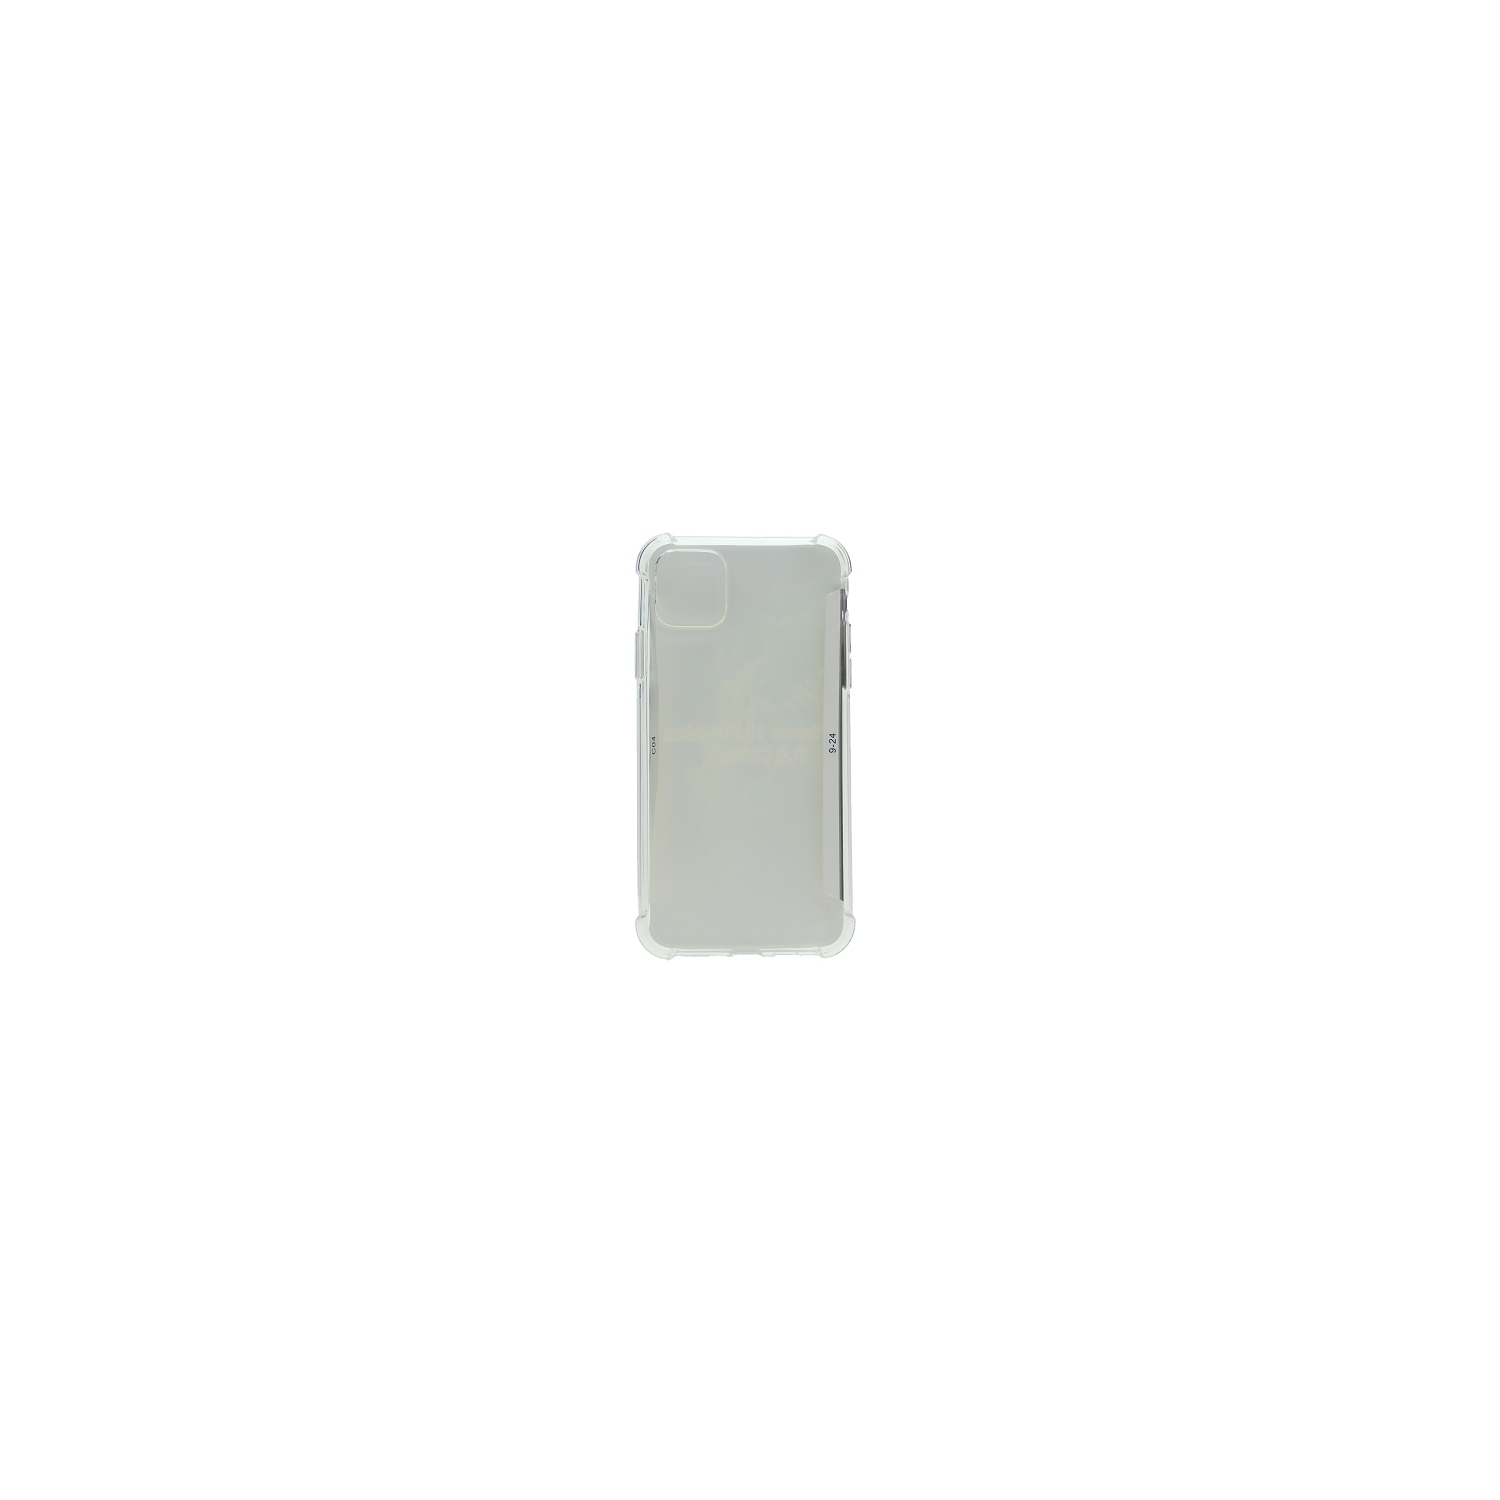 TopSave Extra Corner Bumper Soft TPU Gel Rubber Case For Apple iPhone 13 Mini (5.4"), Clear